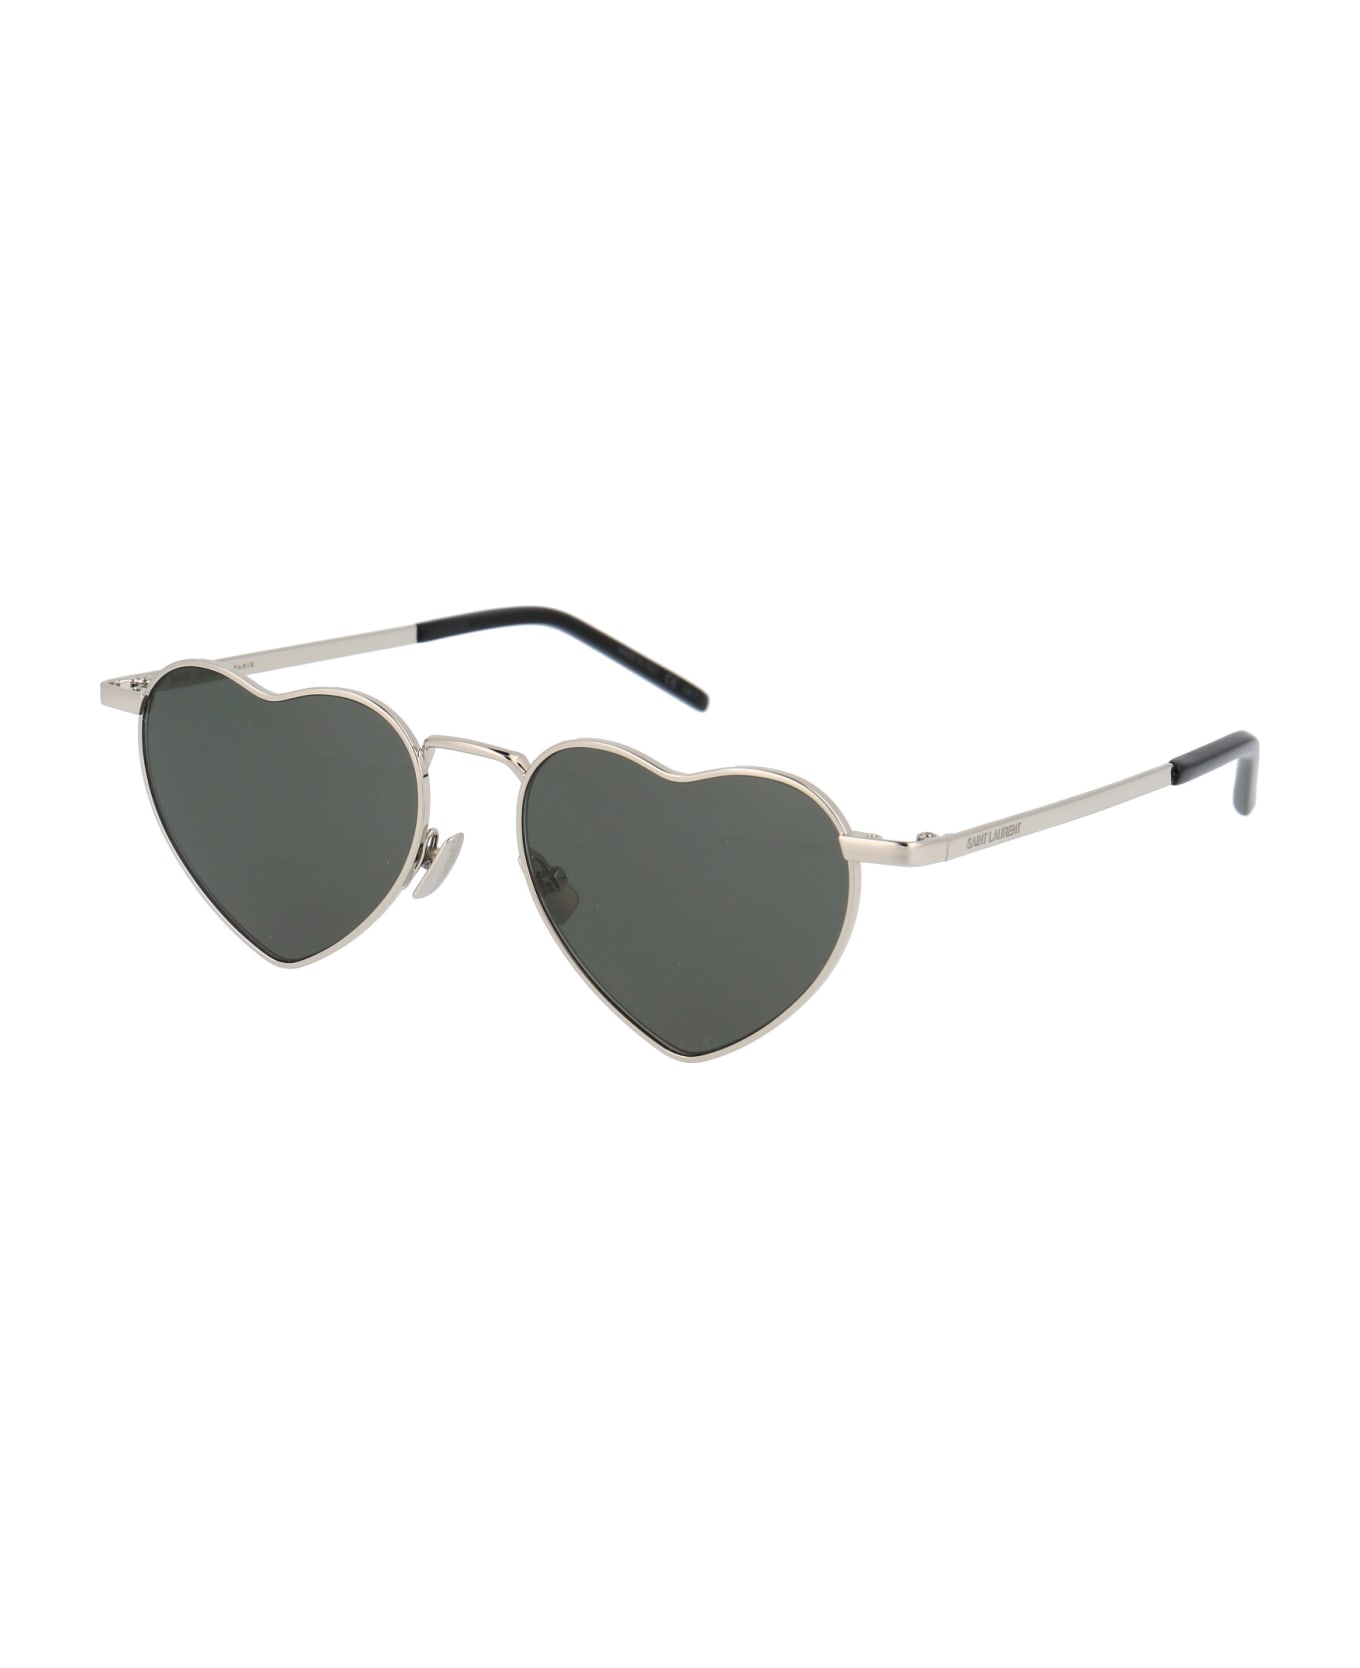 Saint Laurent Eyewear Sl 301 Loulou Sunglasses - 001 SILVER SILVER GREY